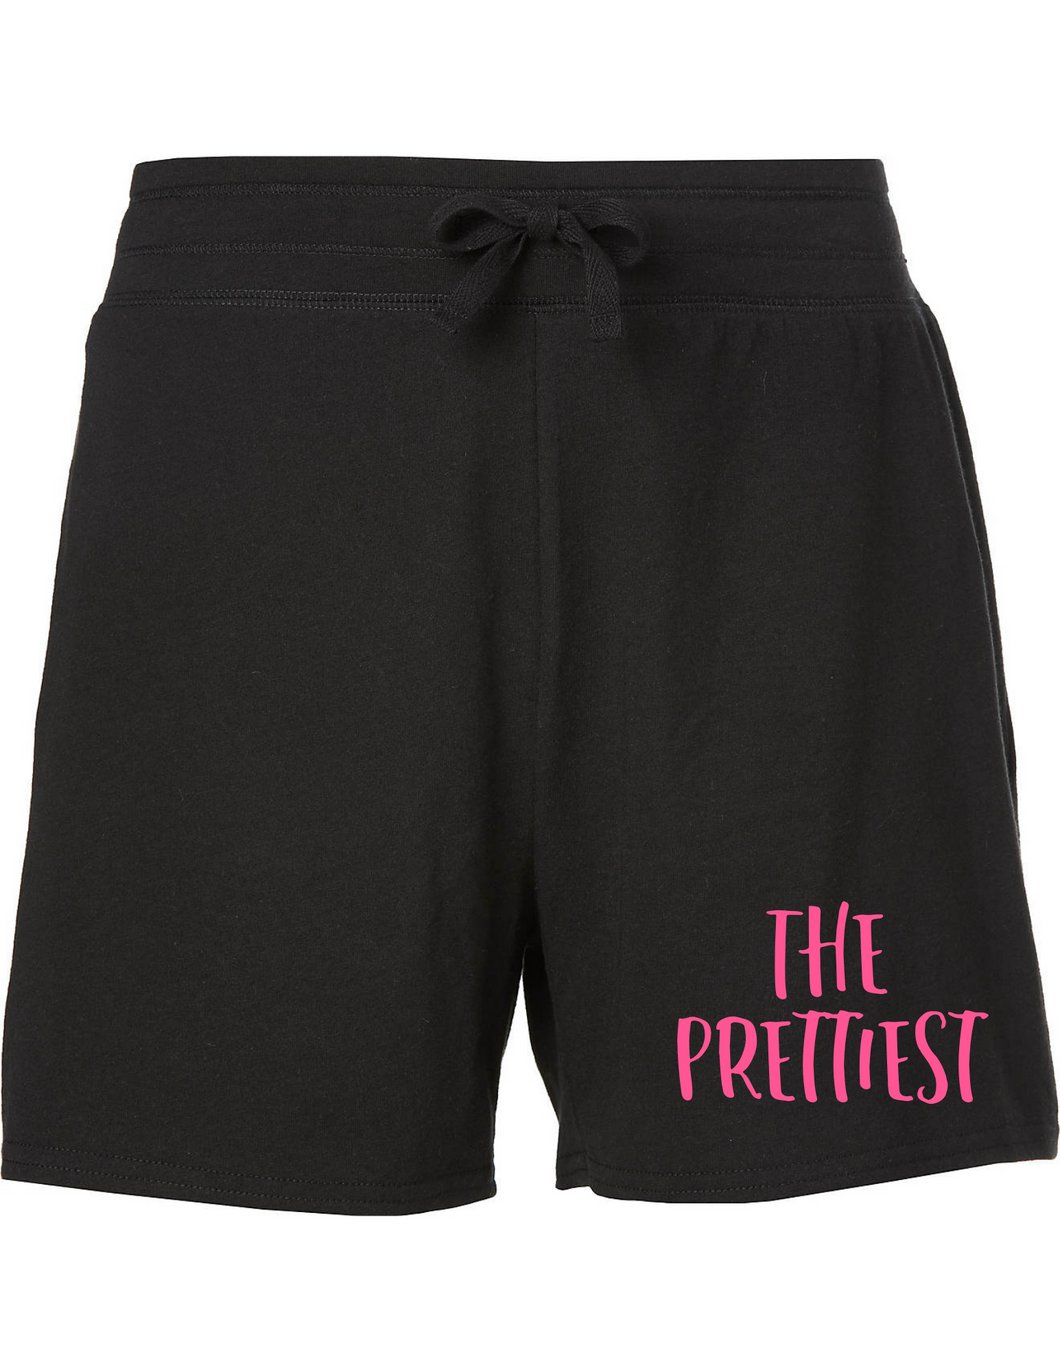 The Prettiest Shorts